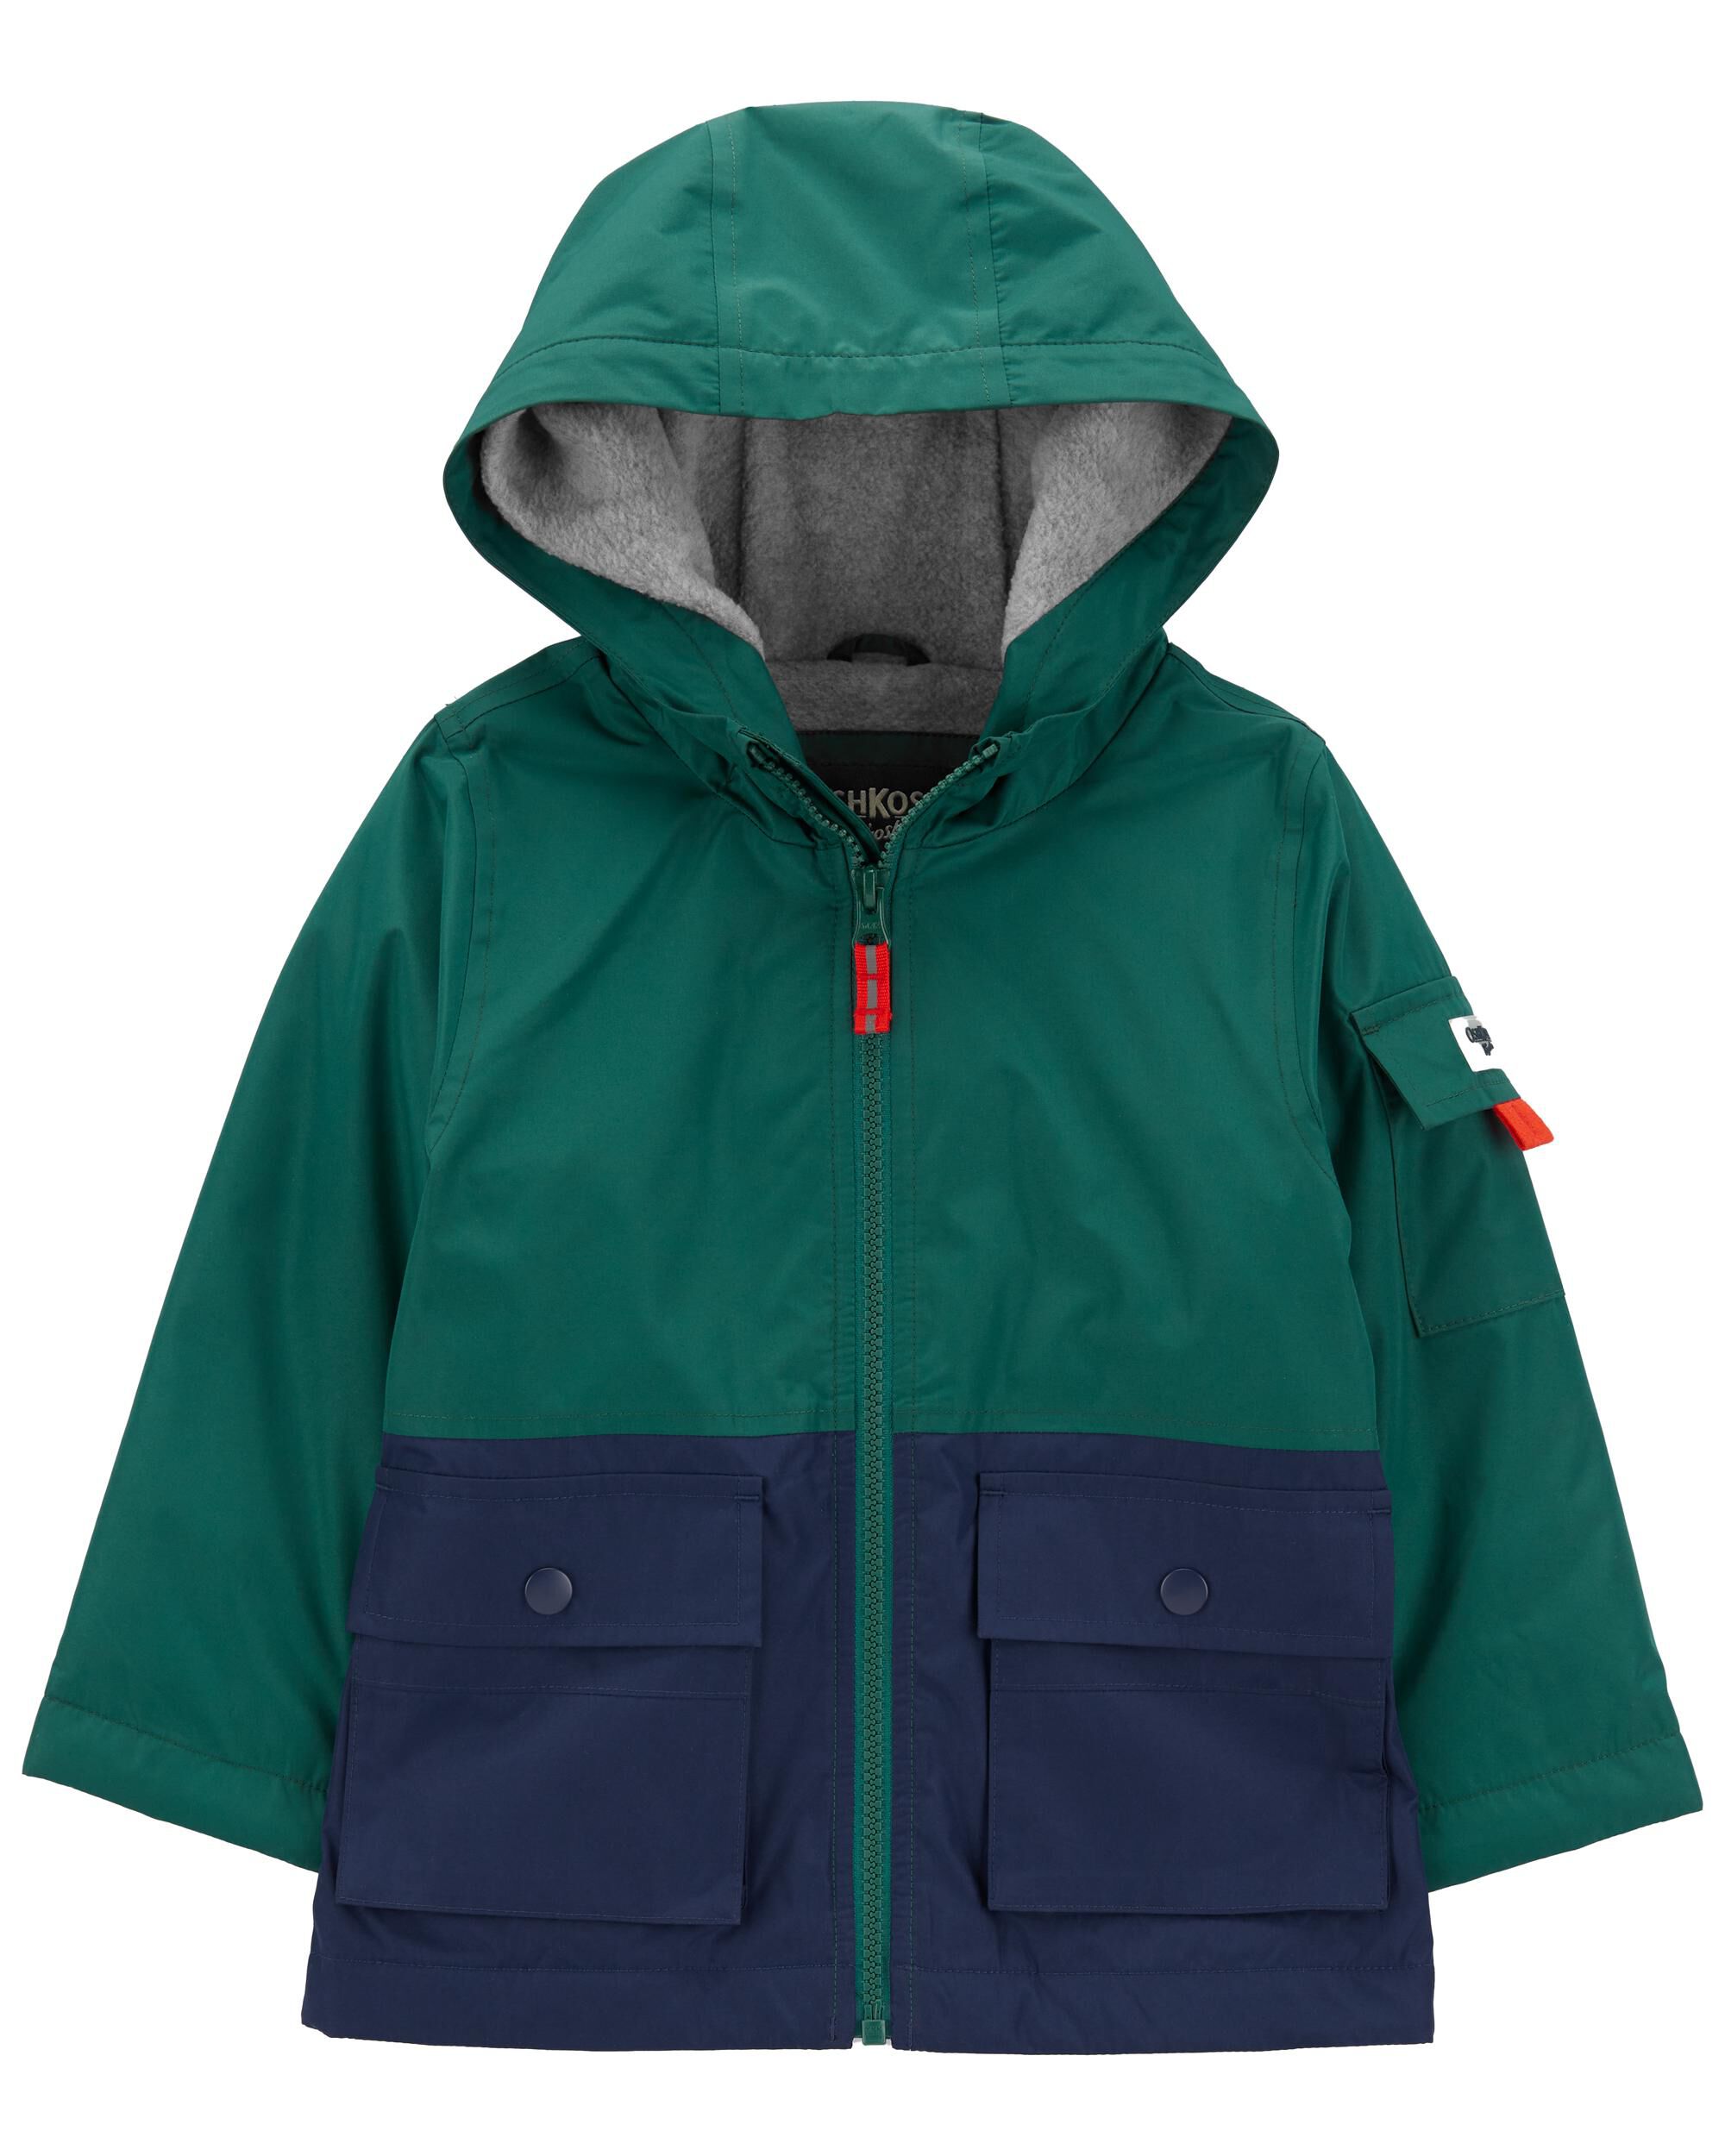 Fleece-Lined Colourblock Jacket